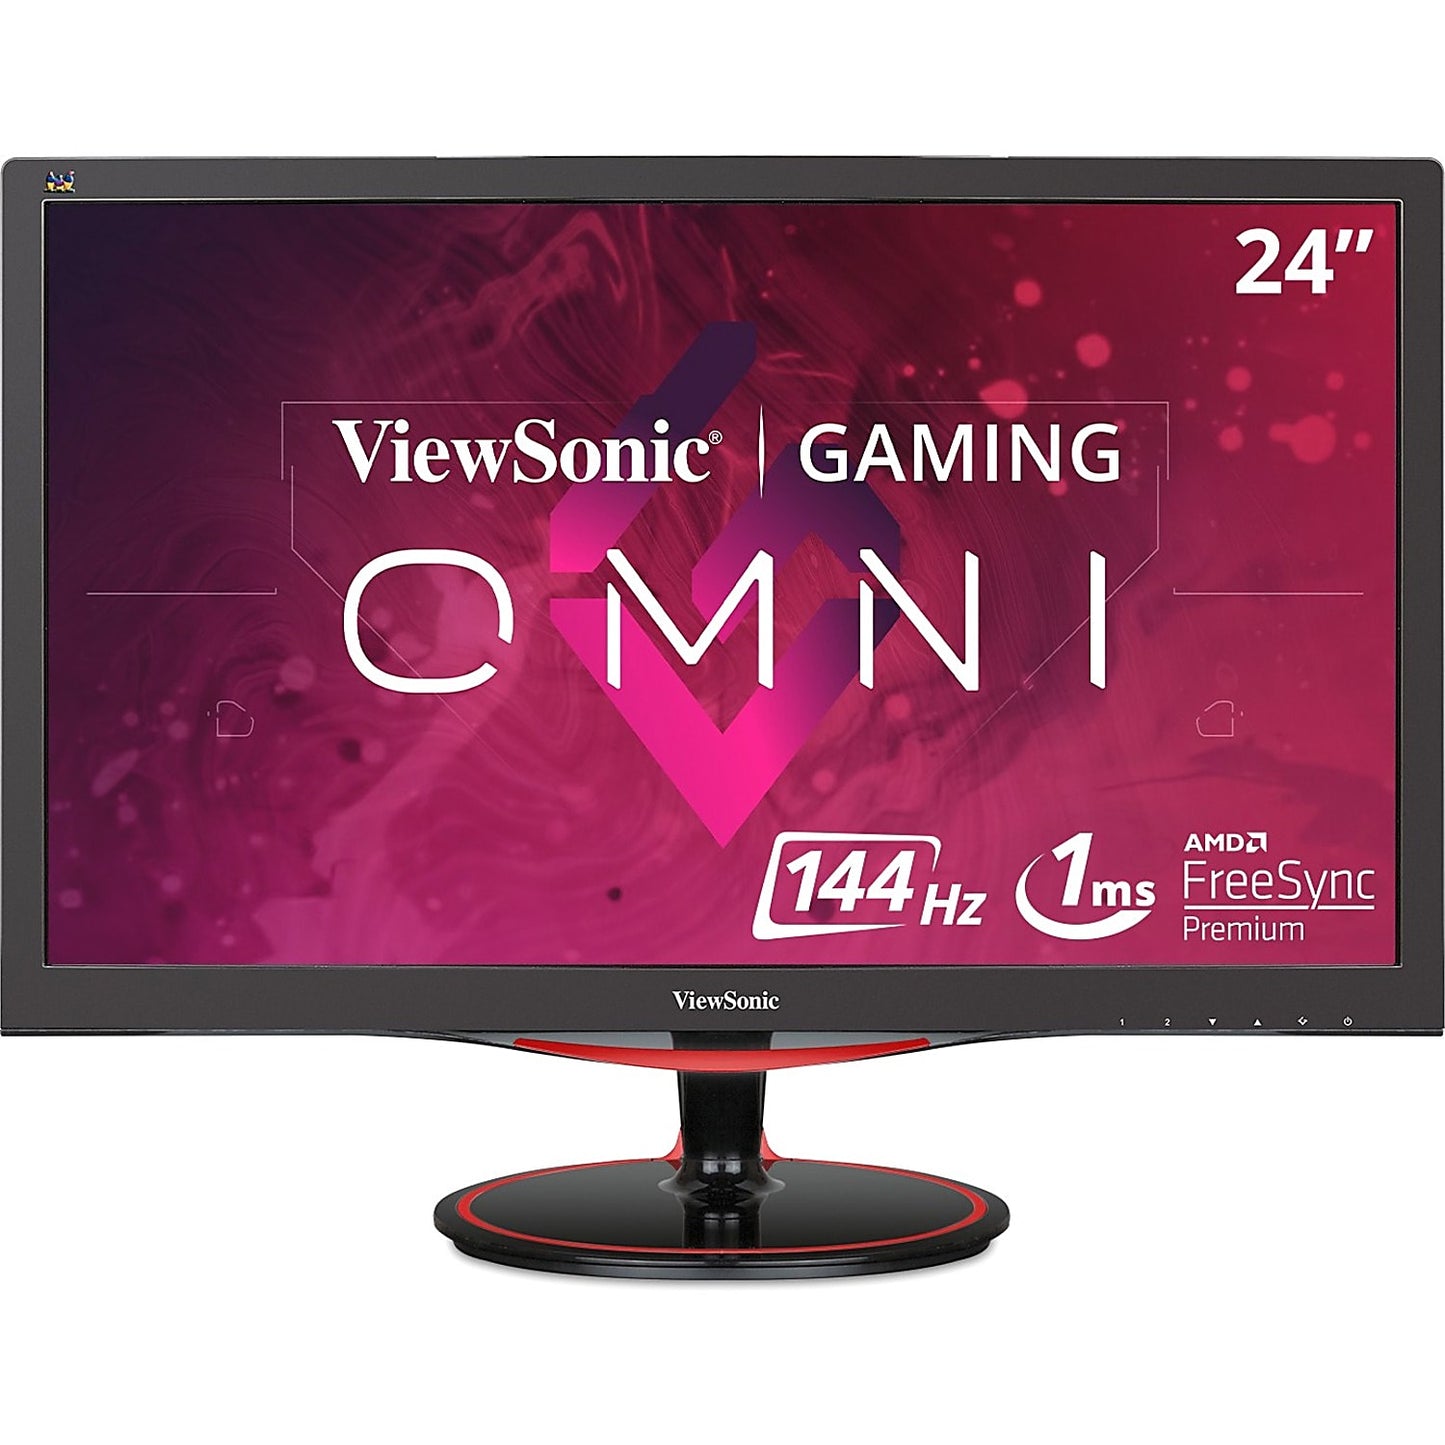 ViewSonic 24" FHD LED LCD Gaming Monitor - VX2458-MHD